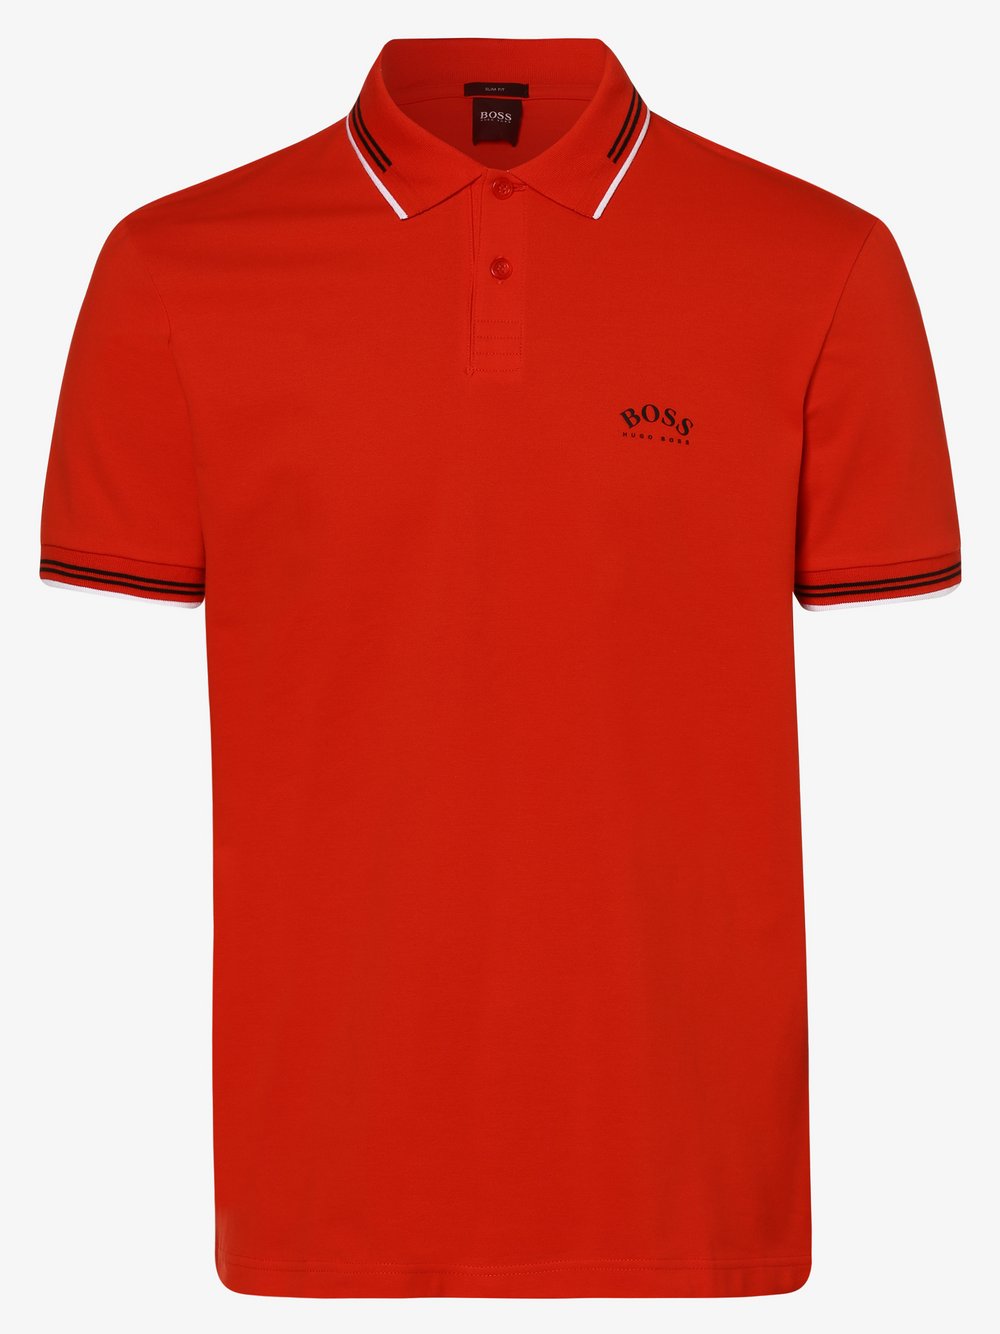 BOSS Athleisure - Męska koszulka polo – Paul Curved, czerwony